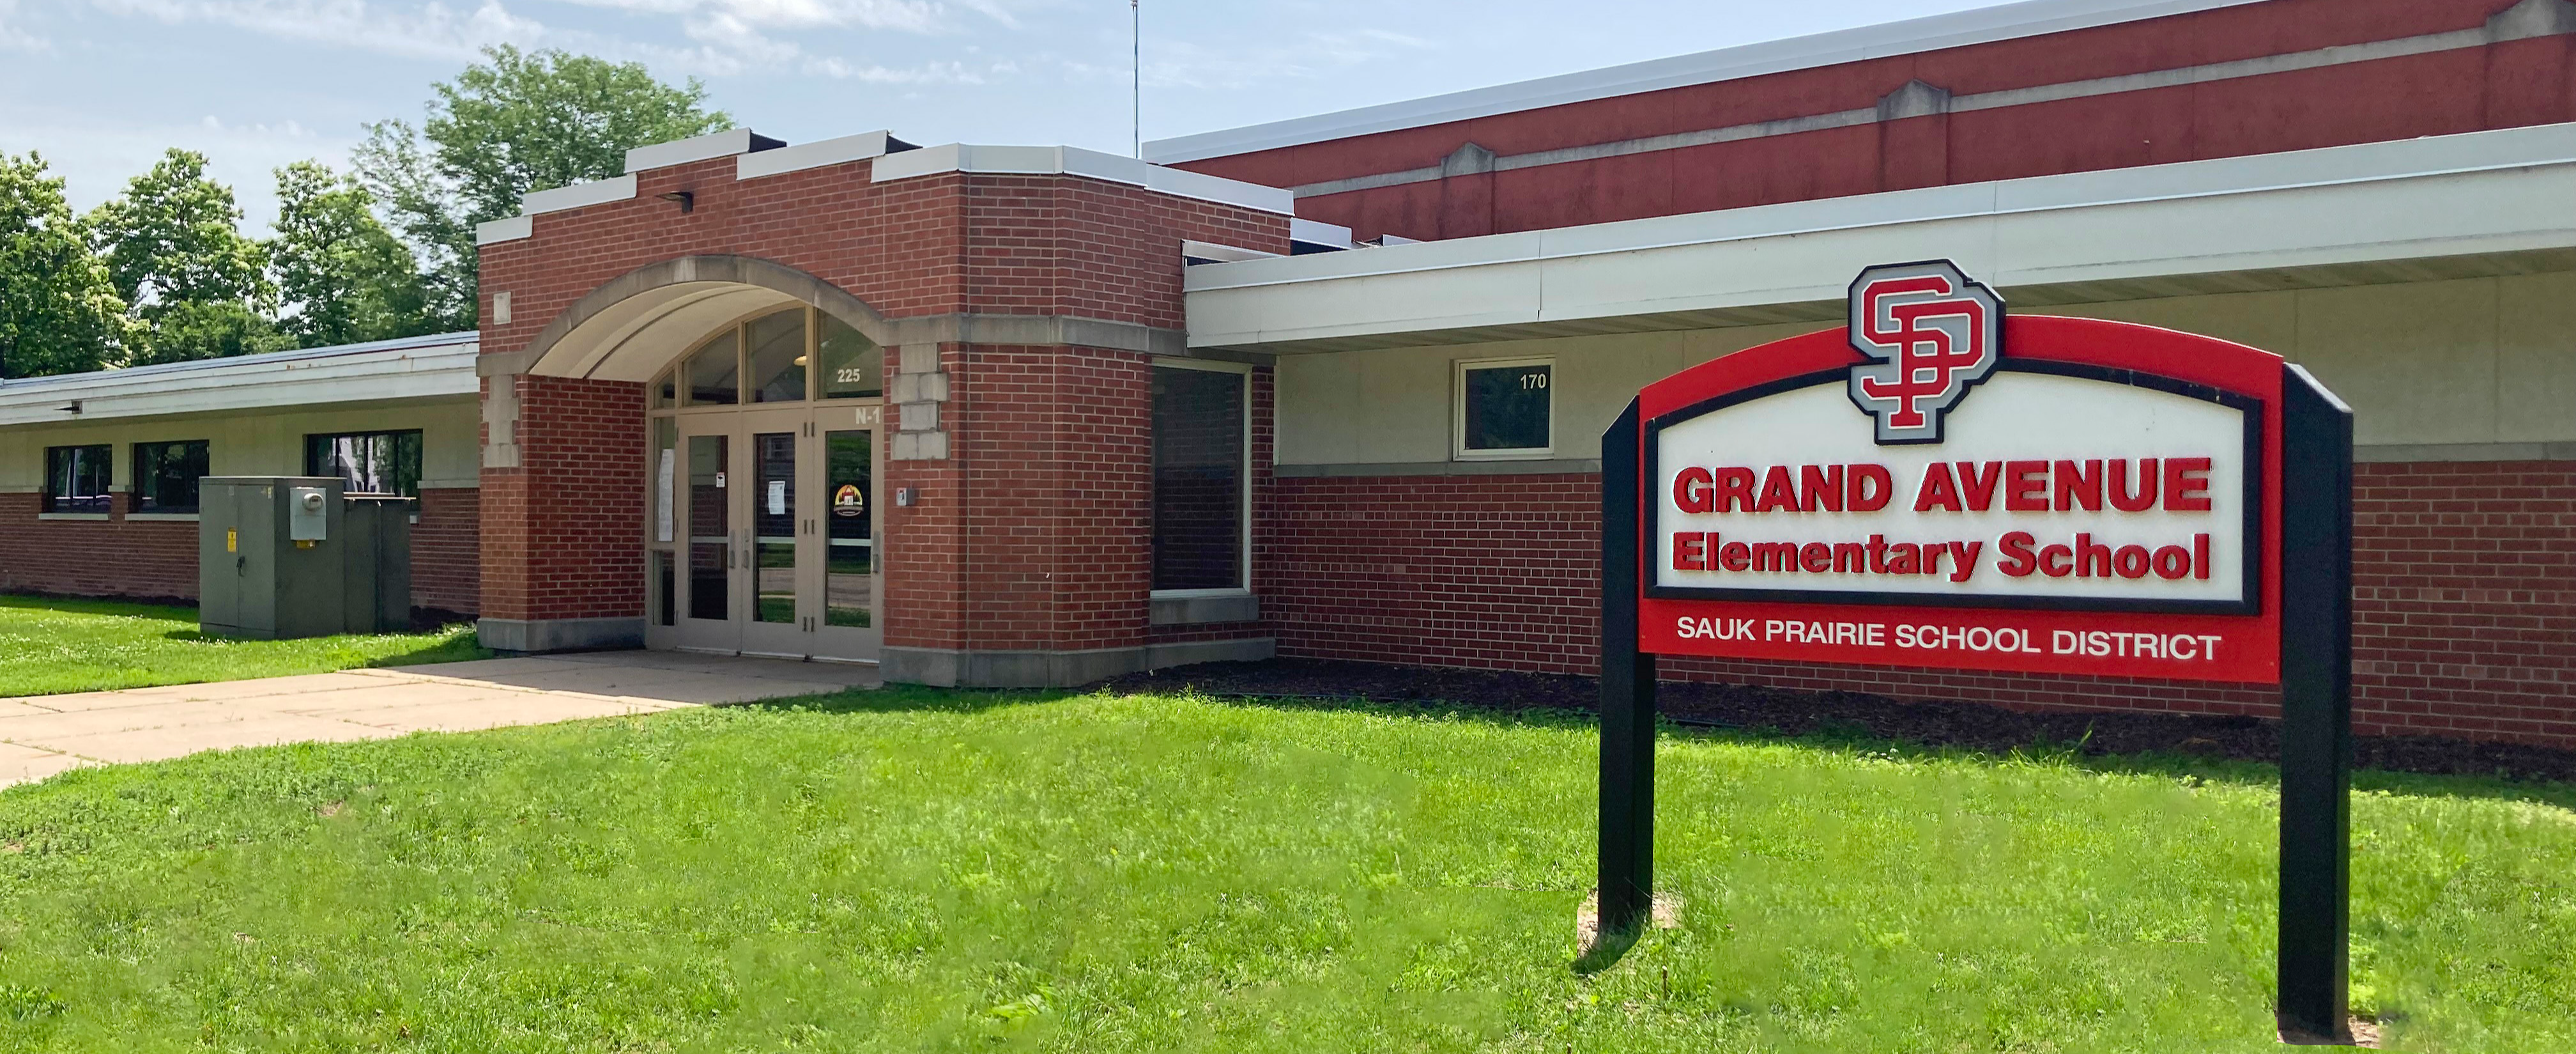 Grand Avenue Elementary School